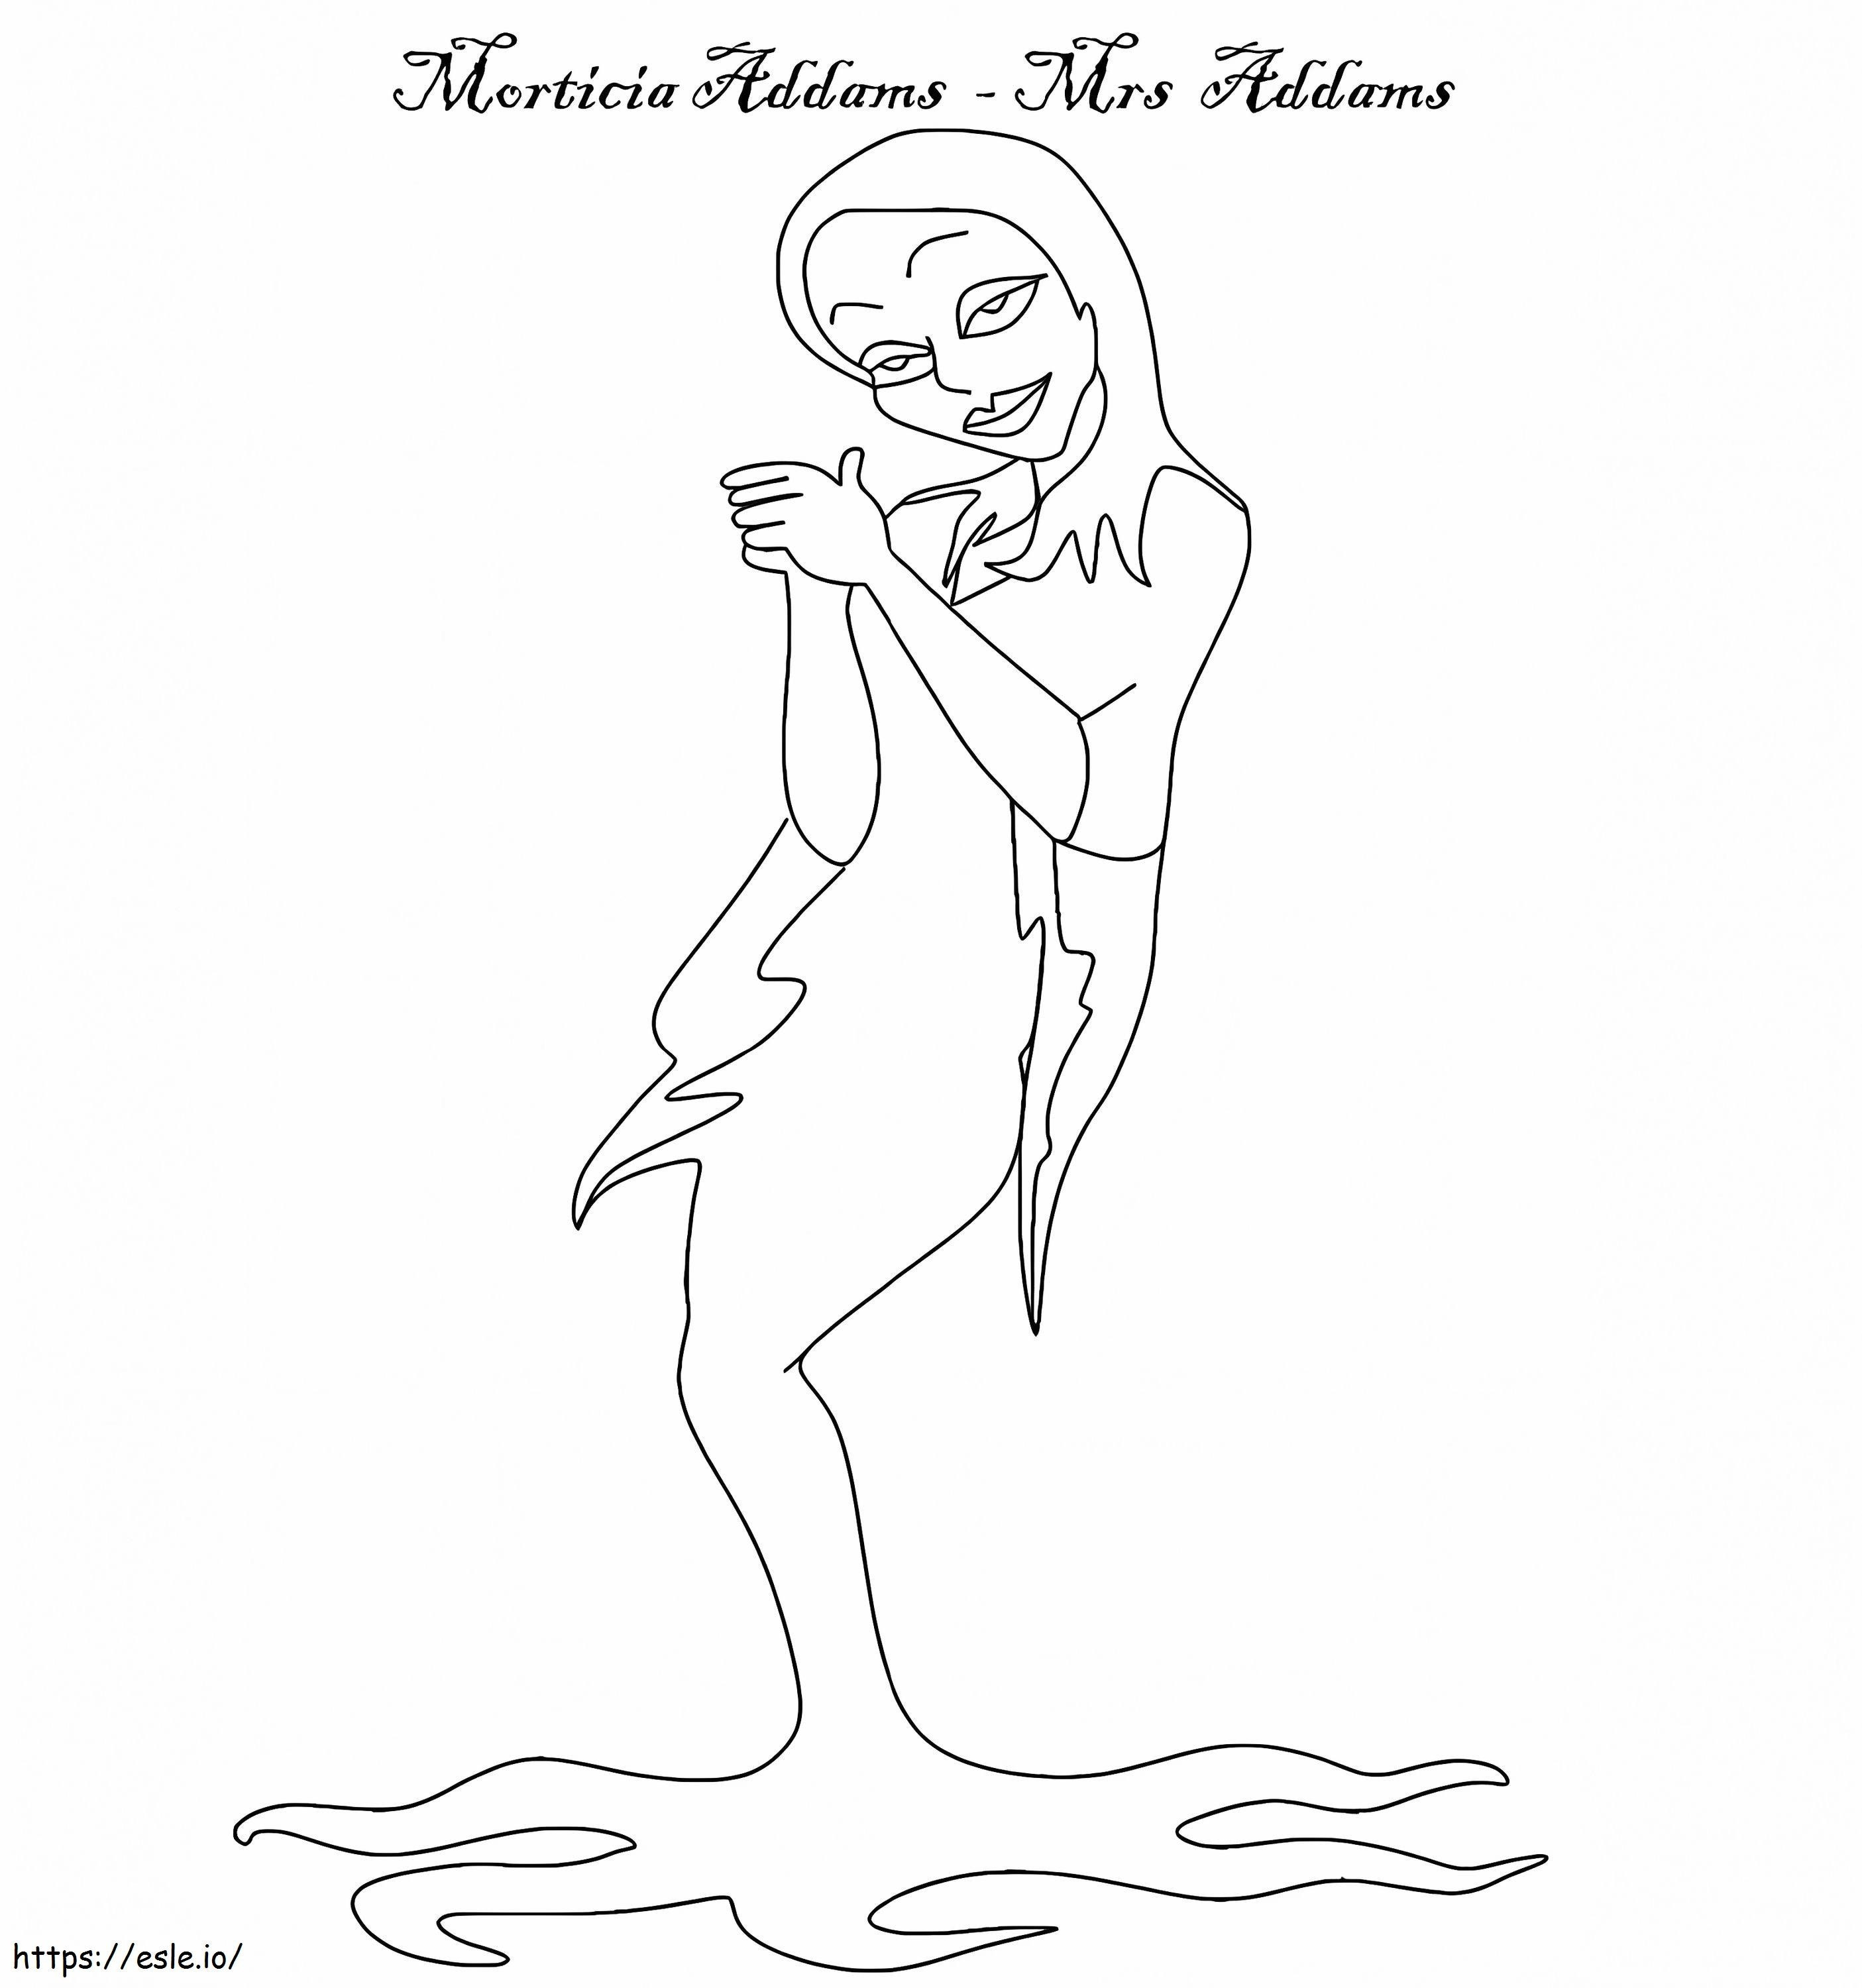 Morticia Addams coloring page